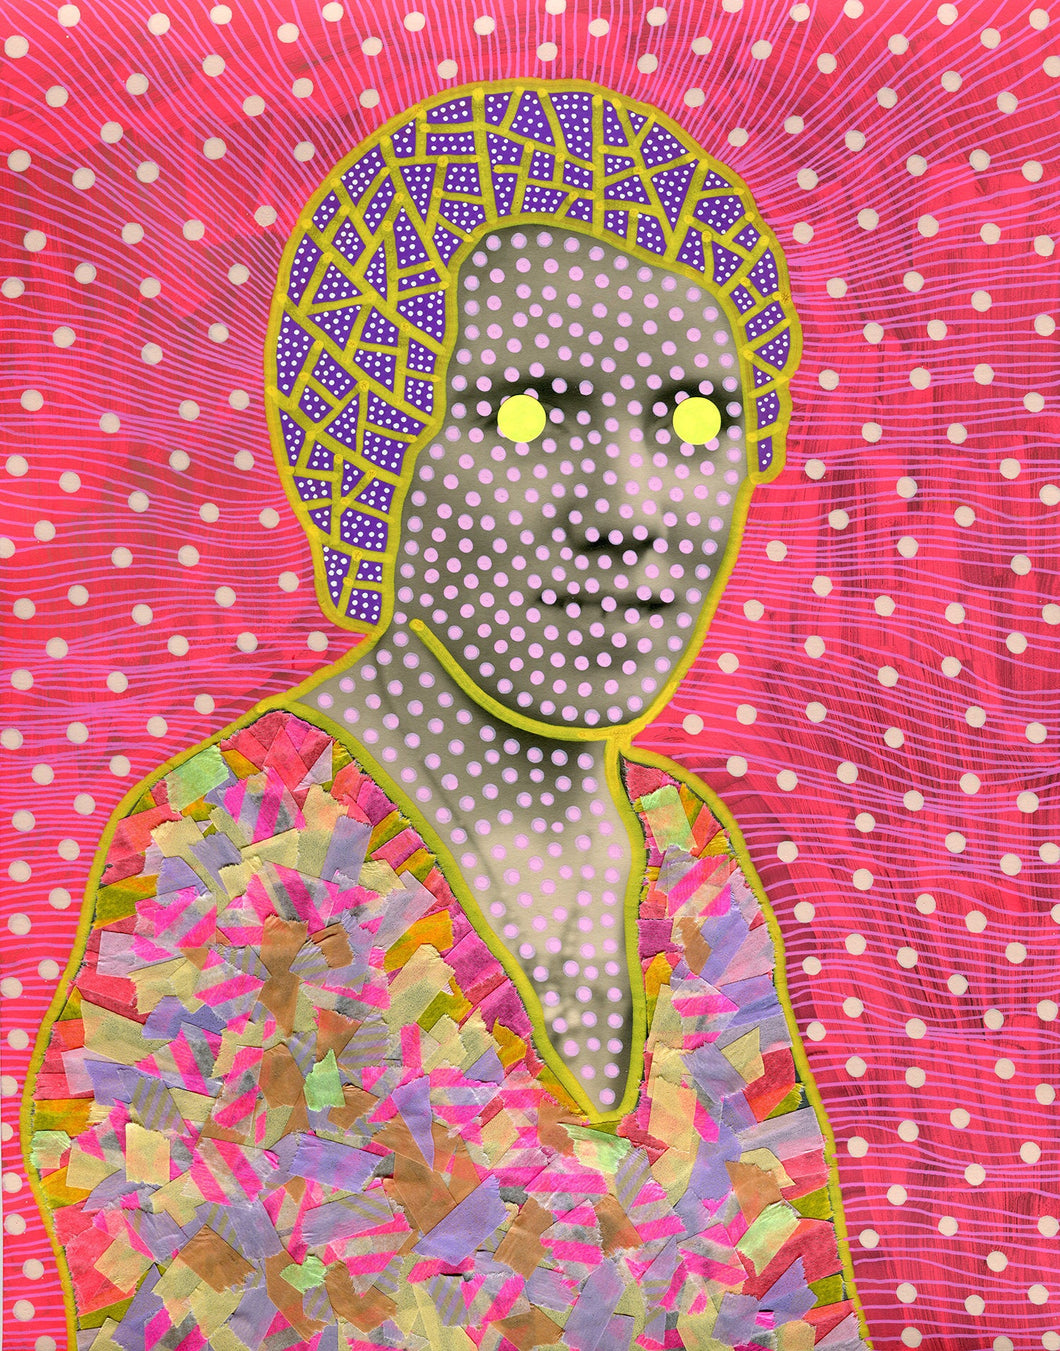 Neon Pop Surreal Mixed Media Collage Artwork - Naomi Vona Art